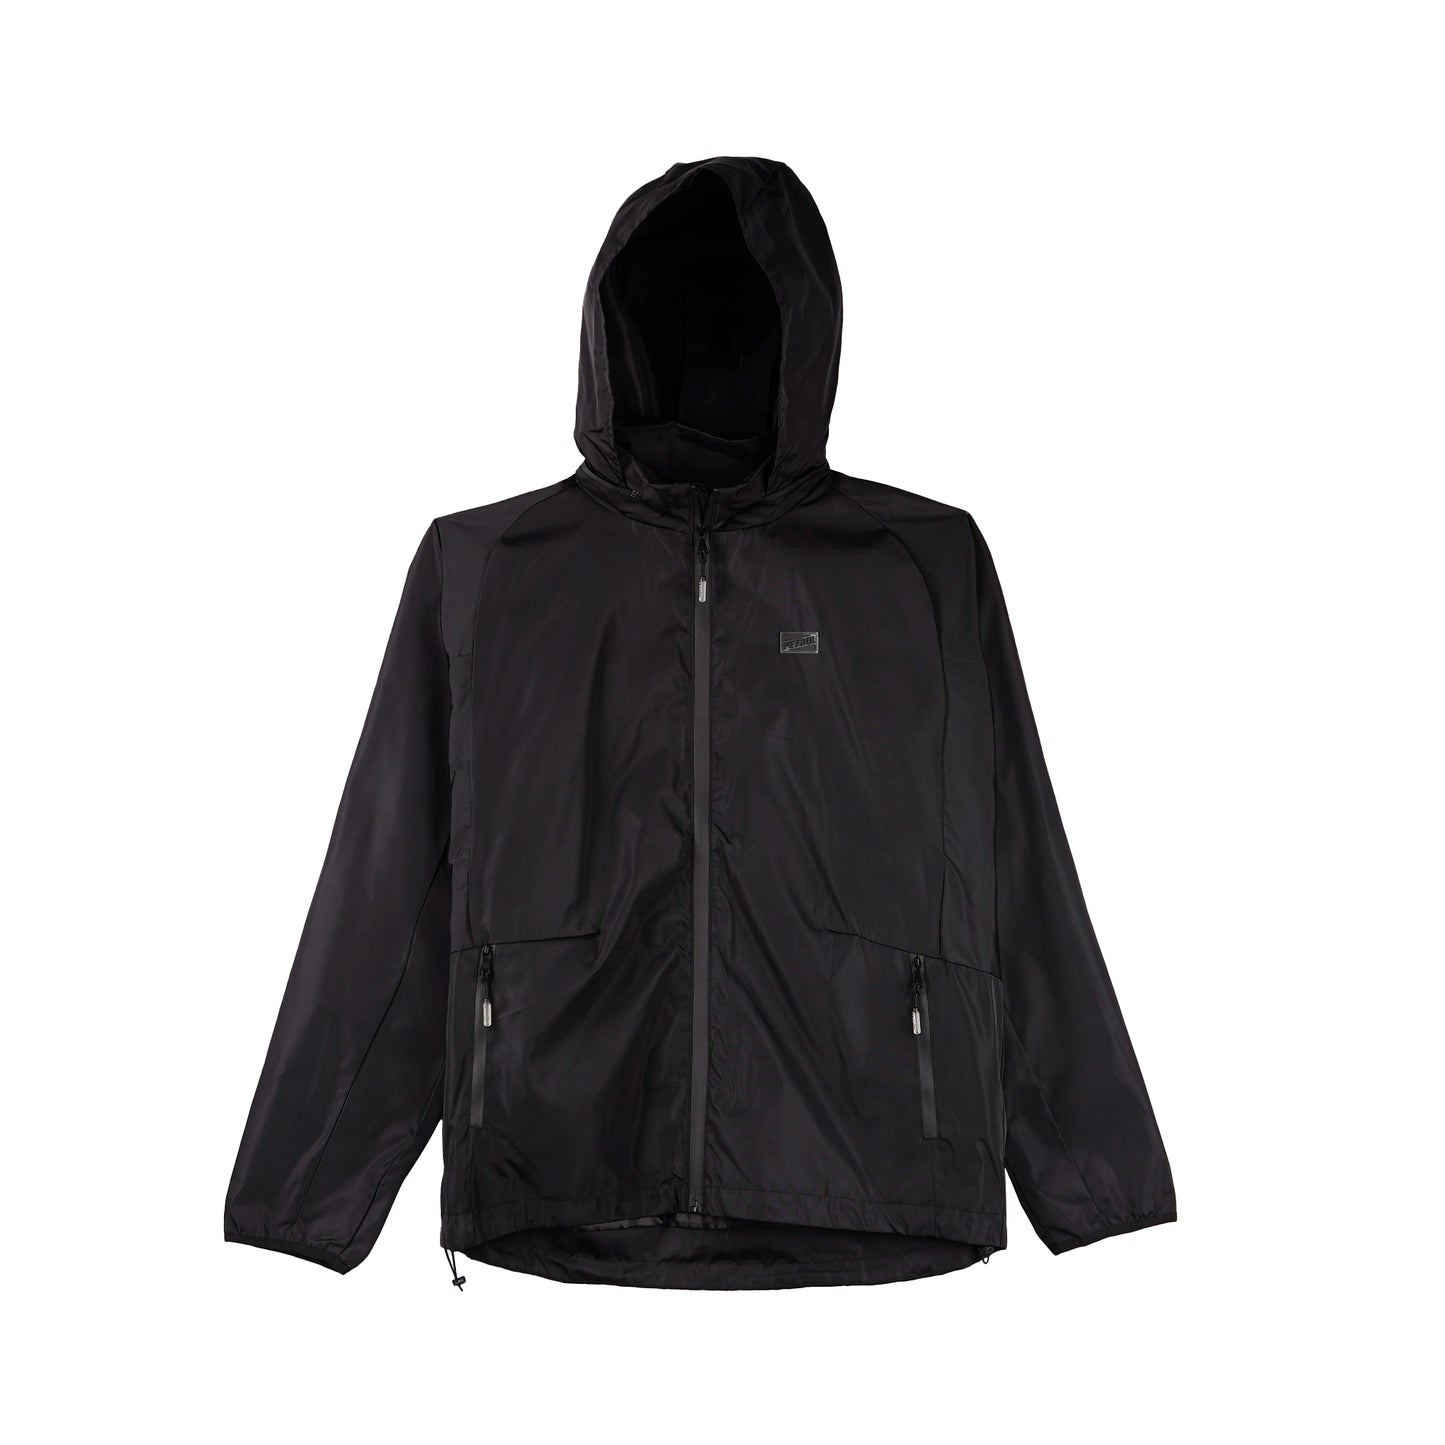 Petrol Basic Jacket for Men Regular Fitting Trendy fashion Casual Top Black Jacket for Men 130599 (Black)